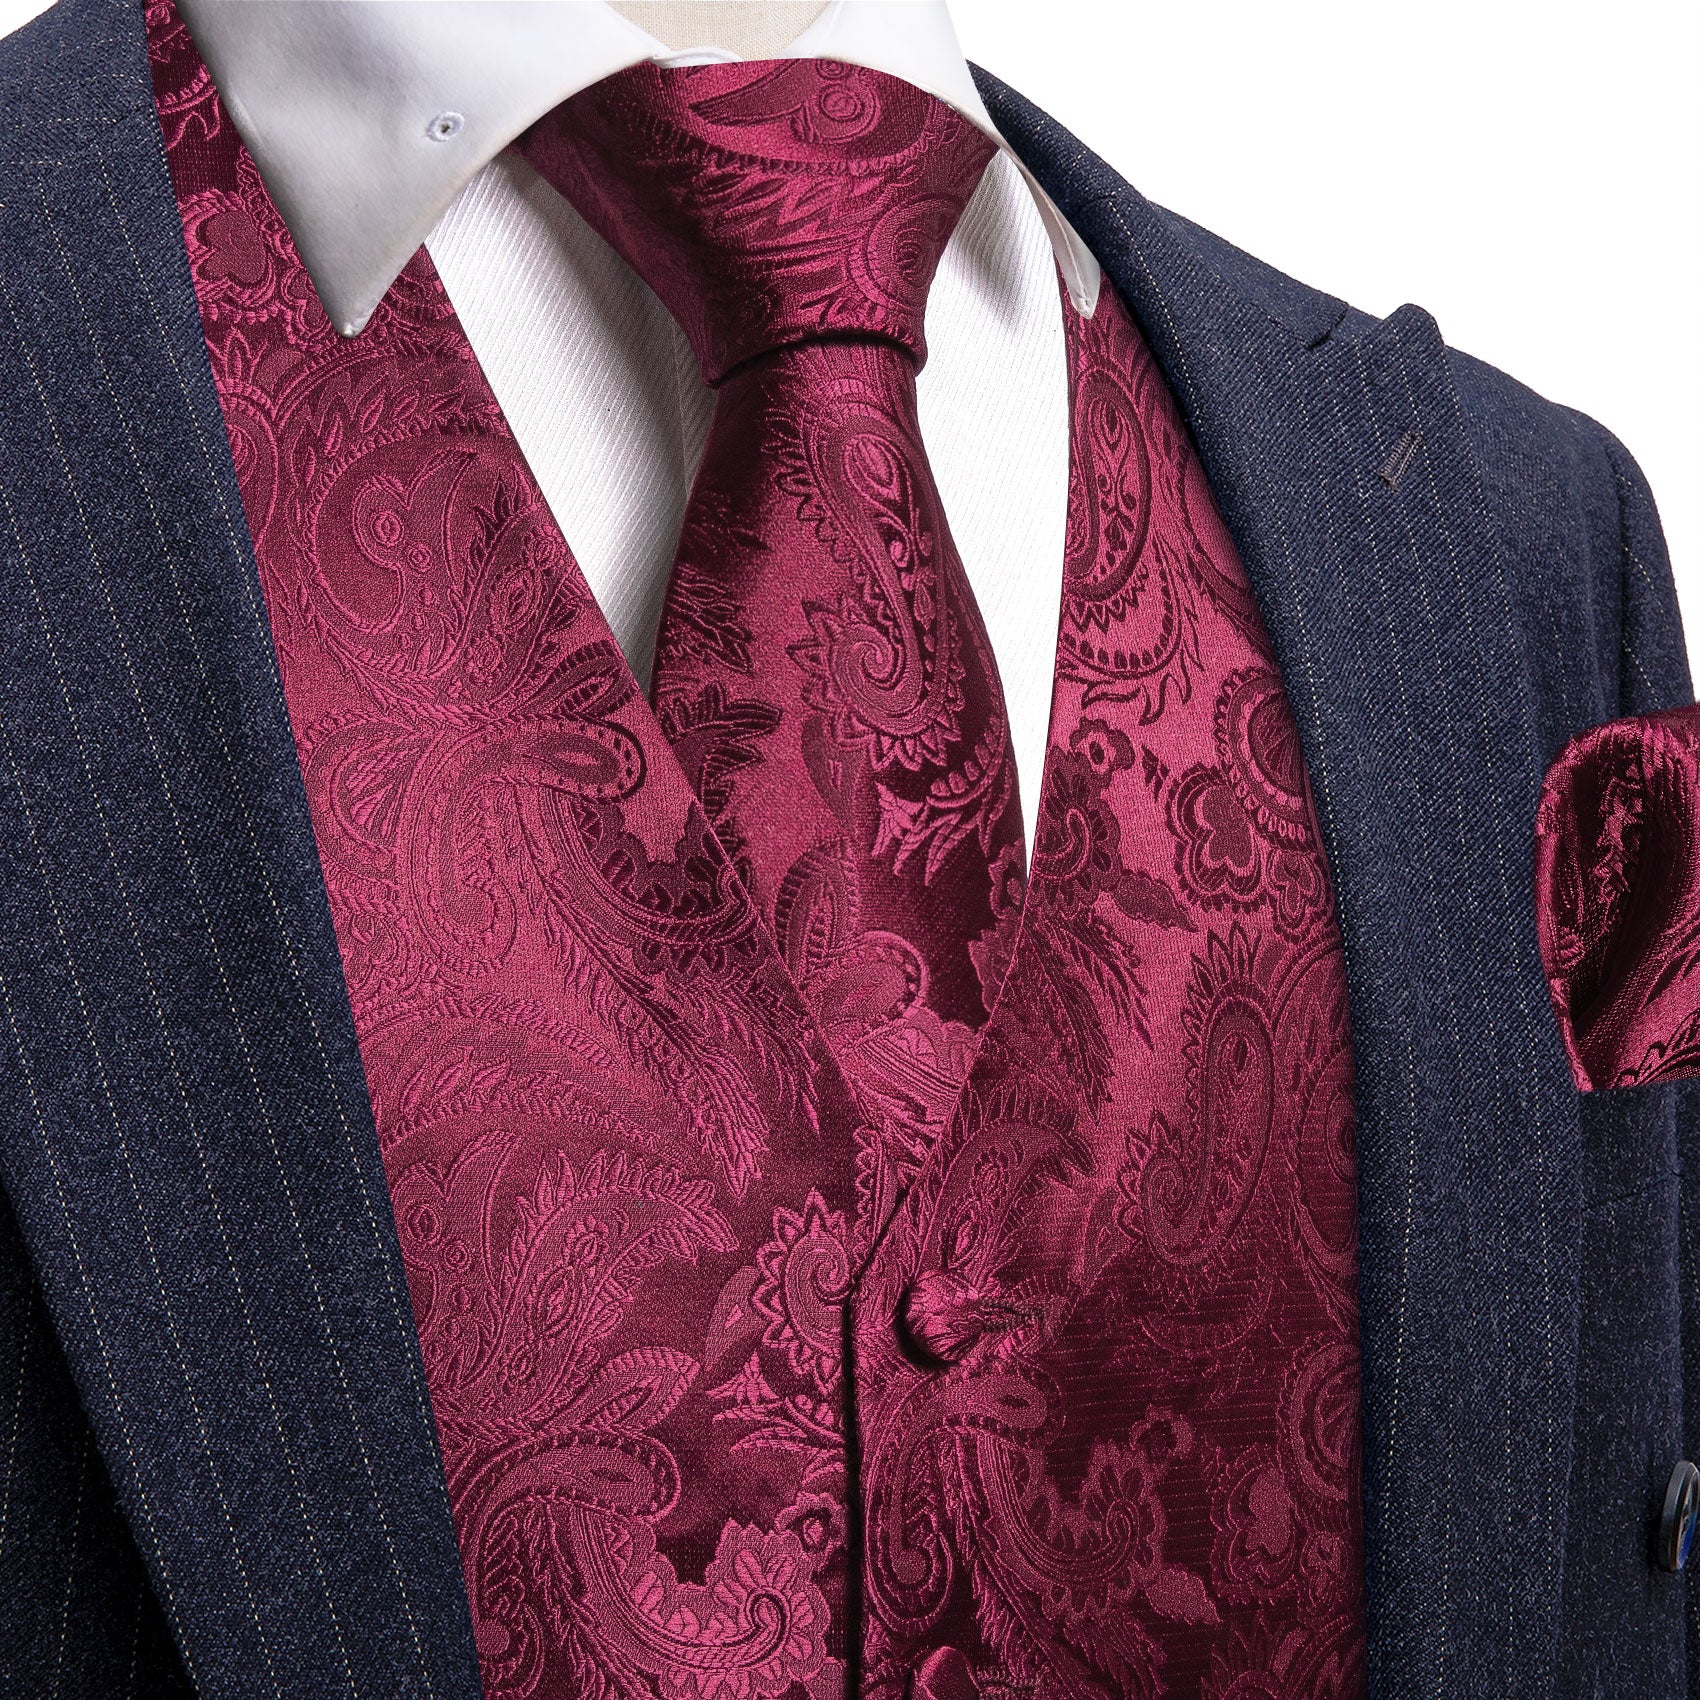 maroon ties vest set